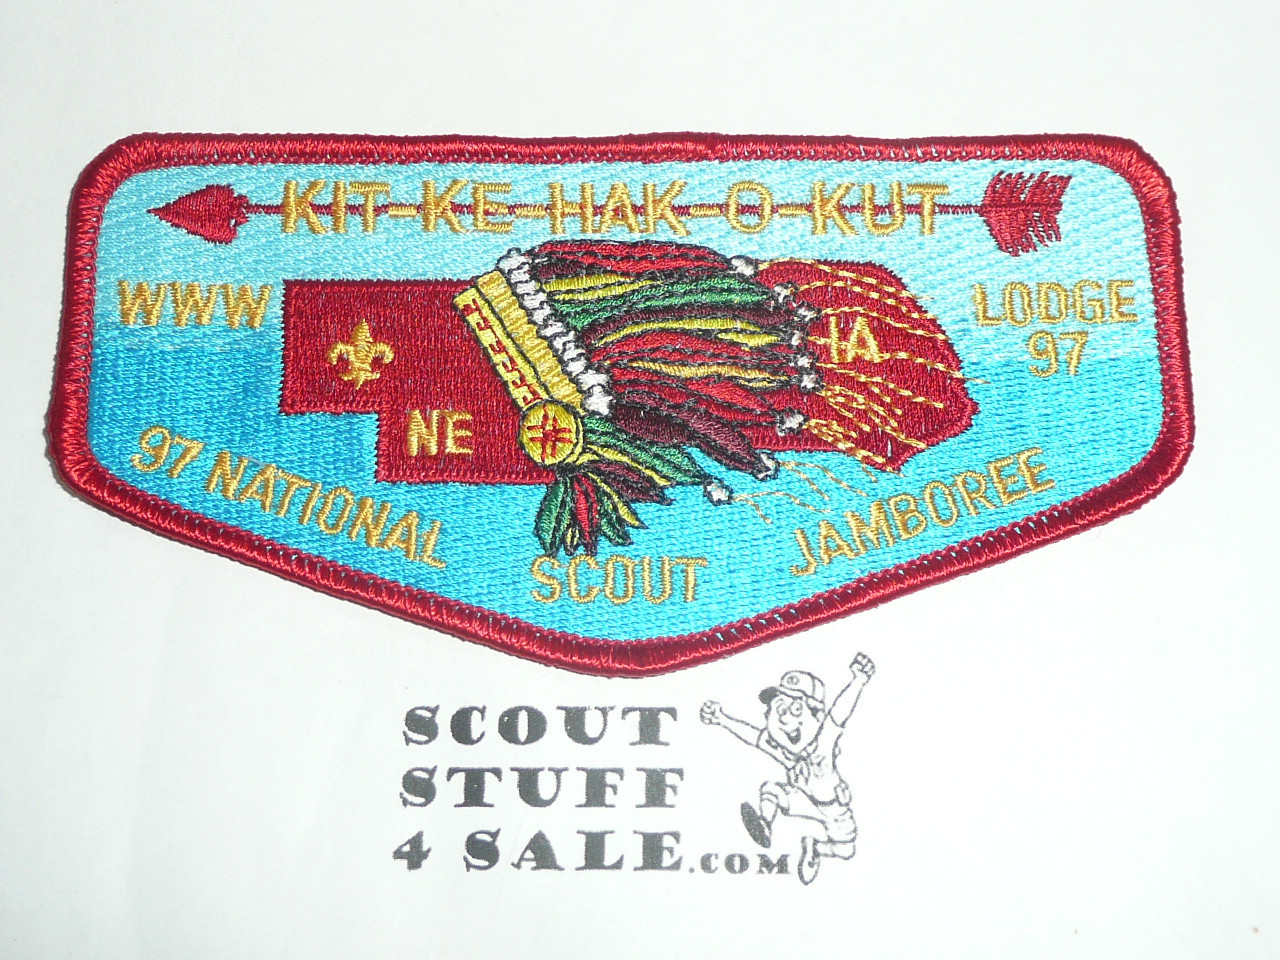 Order of the Arrow Lodge #97 Kit-Ke-Hak-O-Kut s14 1997 Jamboree Flap Patch